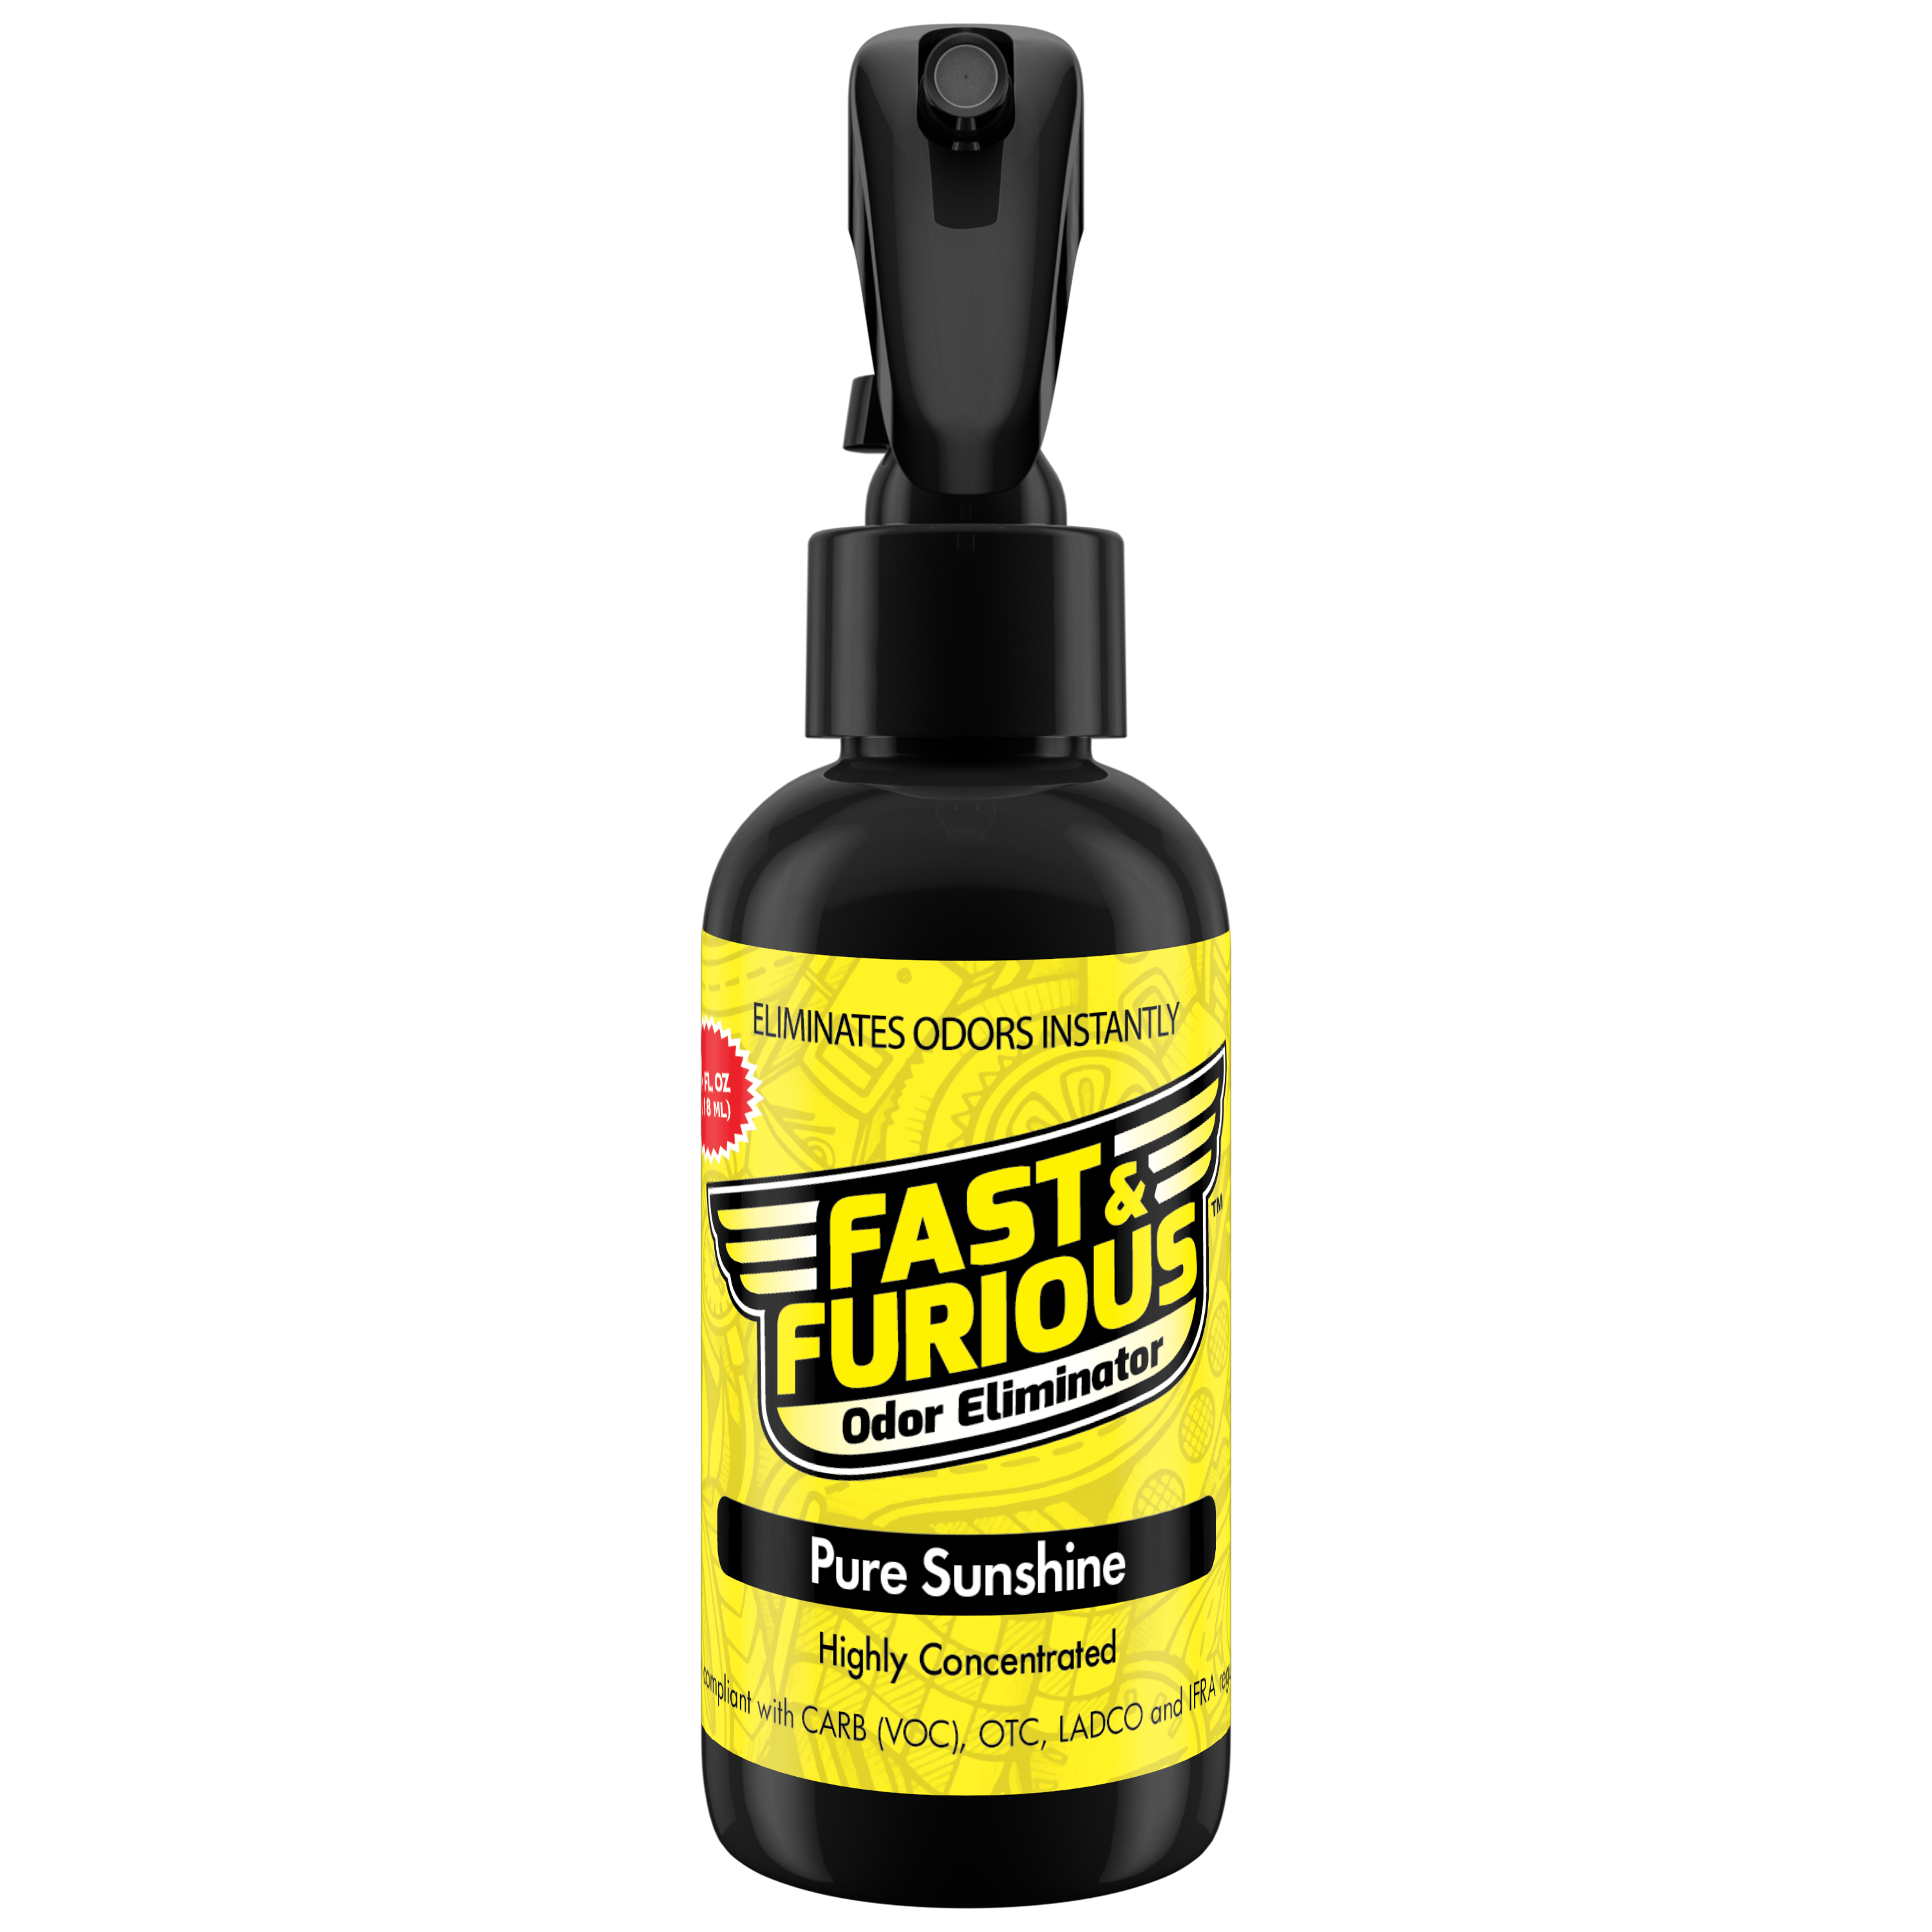 Fast and Furious Odor Eliminator - Pure Sunshine Scent